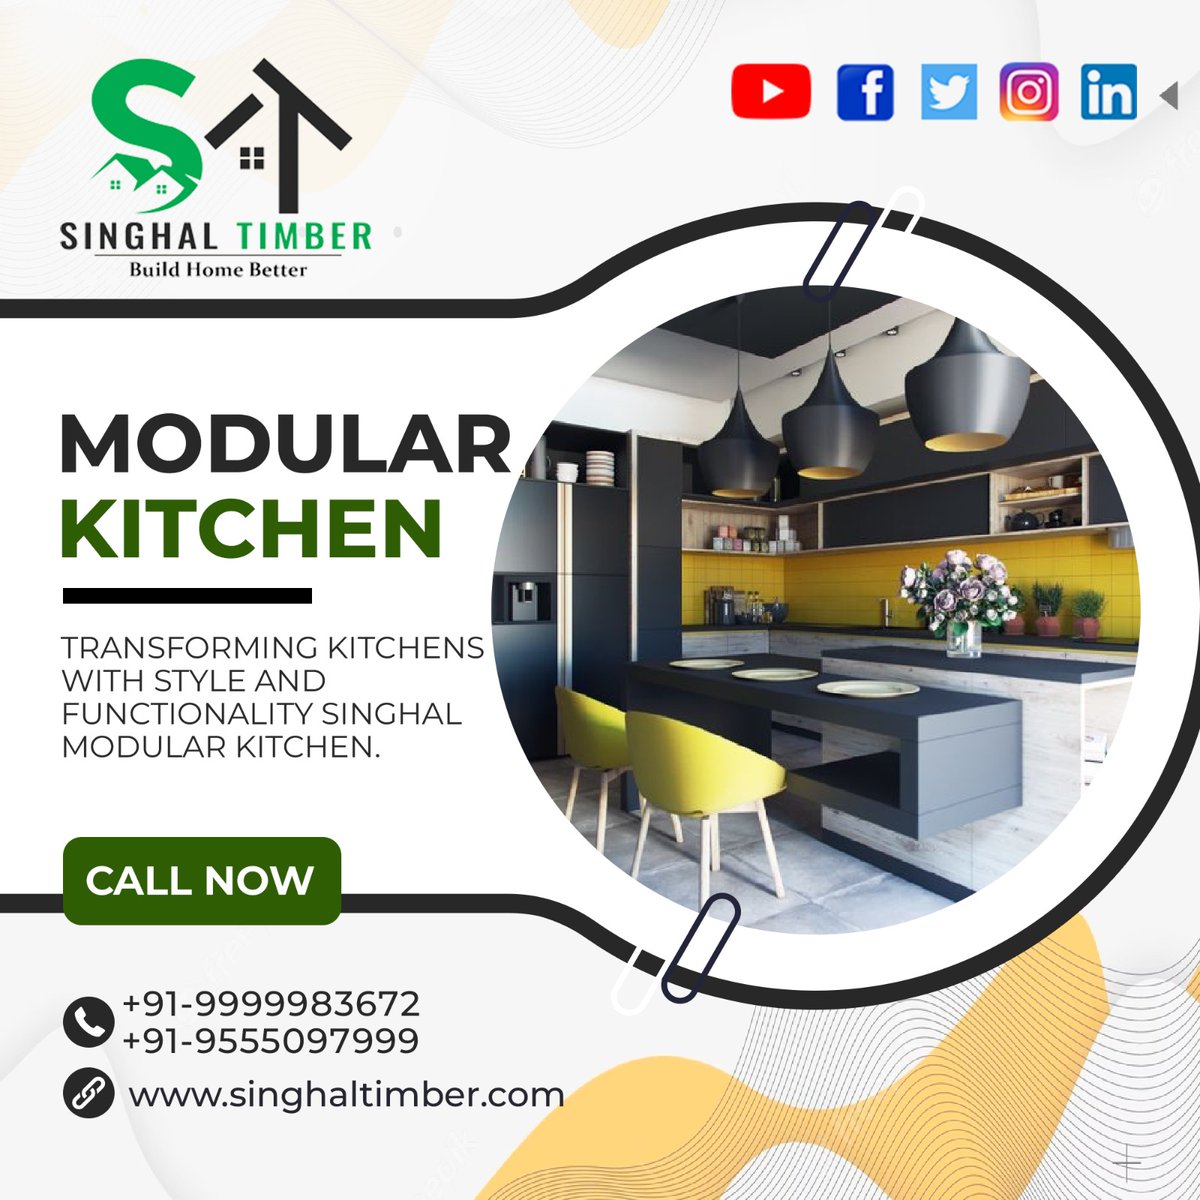 SINGHAL TIMBER II MODULAR KITCHEN
Contact us:-
+91-9999983672/+91-9555097999
singhaltimber.com
D-27, Site-lV, UPSIDC Indl. Area, Greater Noida
#Plywood  
#modularkitchen #kitchendesign #sunmica #LaminateFlooringng #laminate #interiordesign #laminateflooring #design